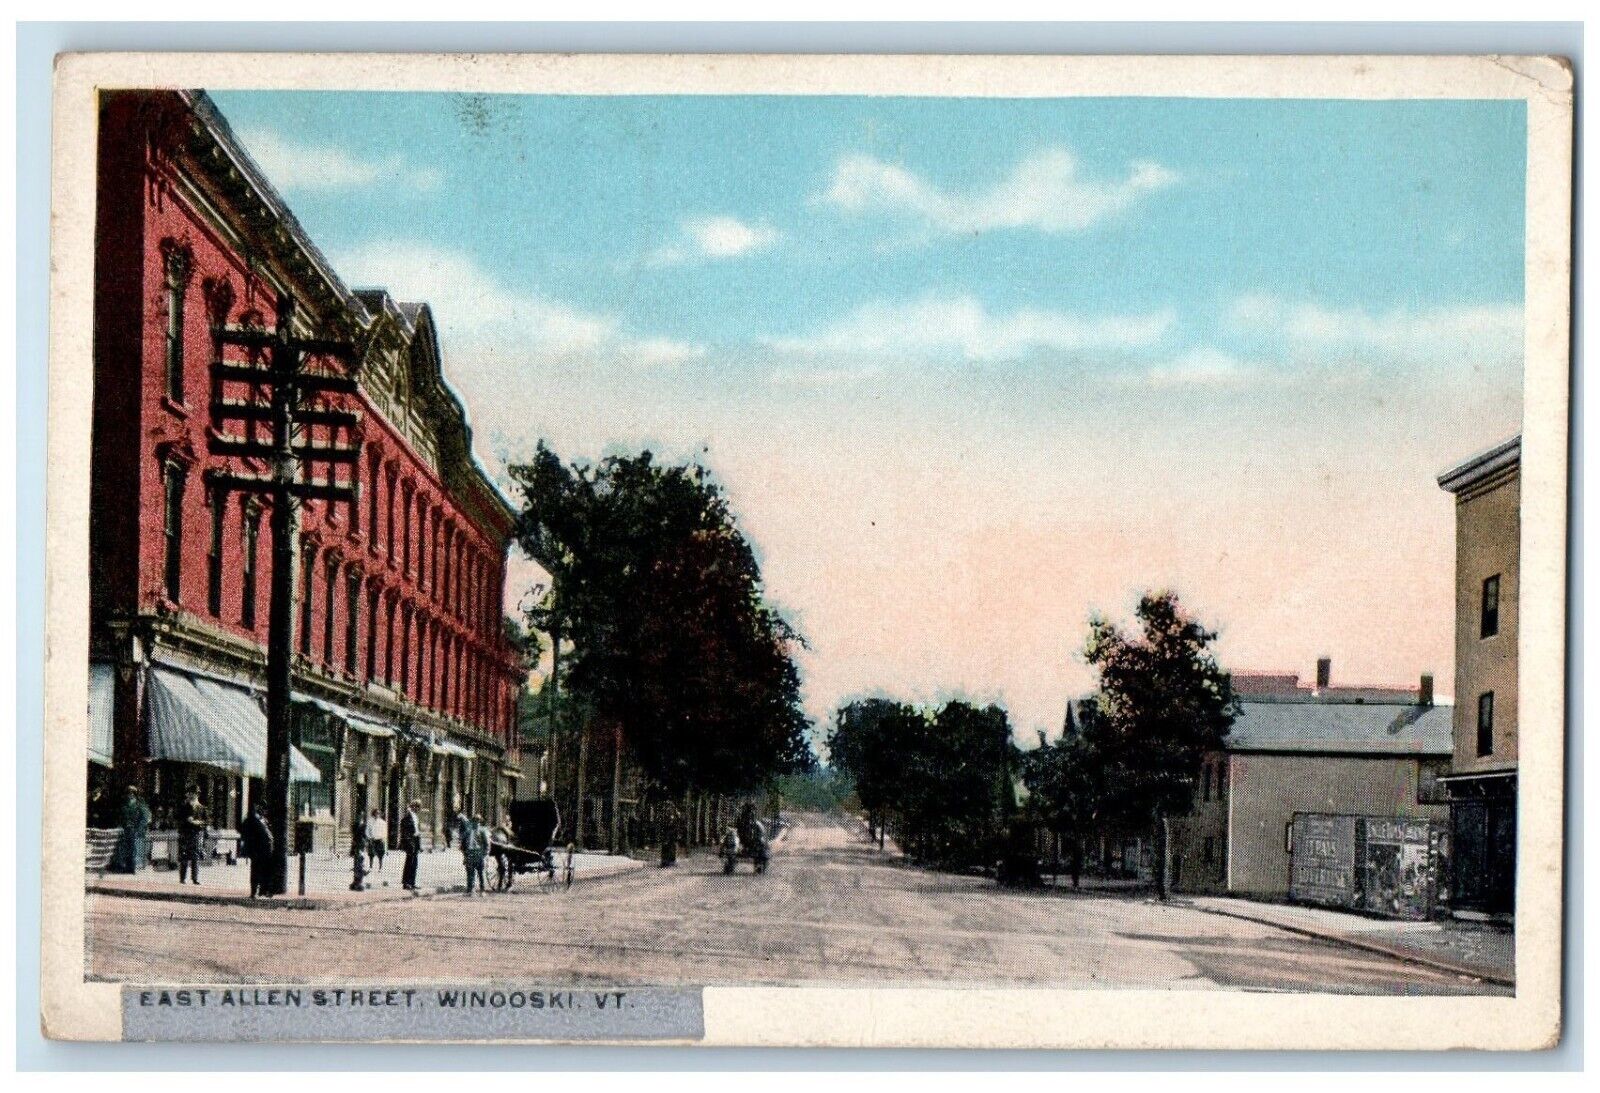 1921 East Allen Street Road Trees Winooski Vermont VT Antique Vintage Postcard